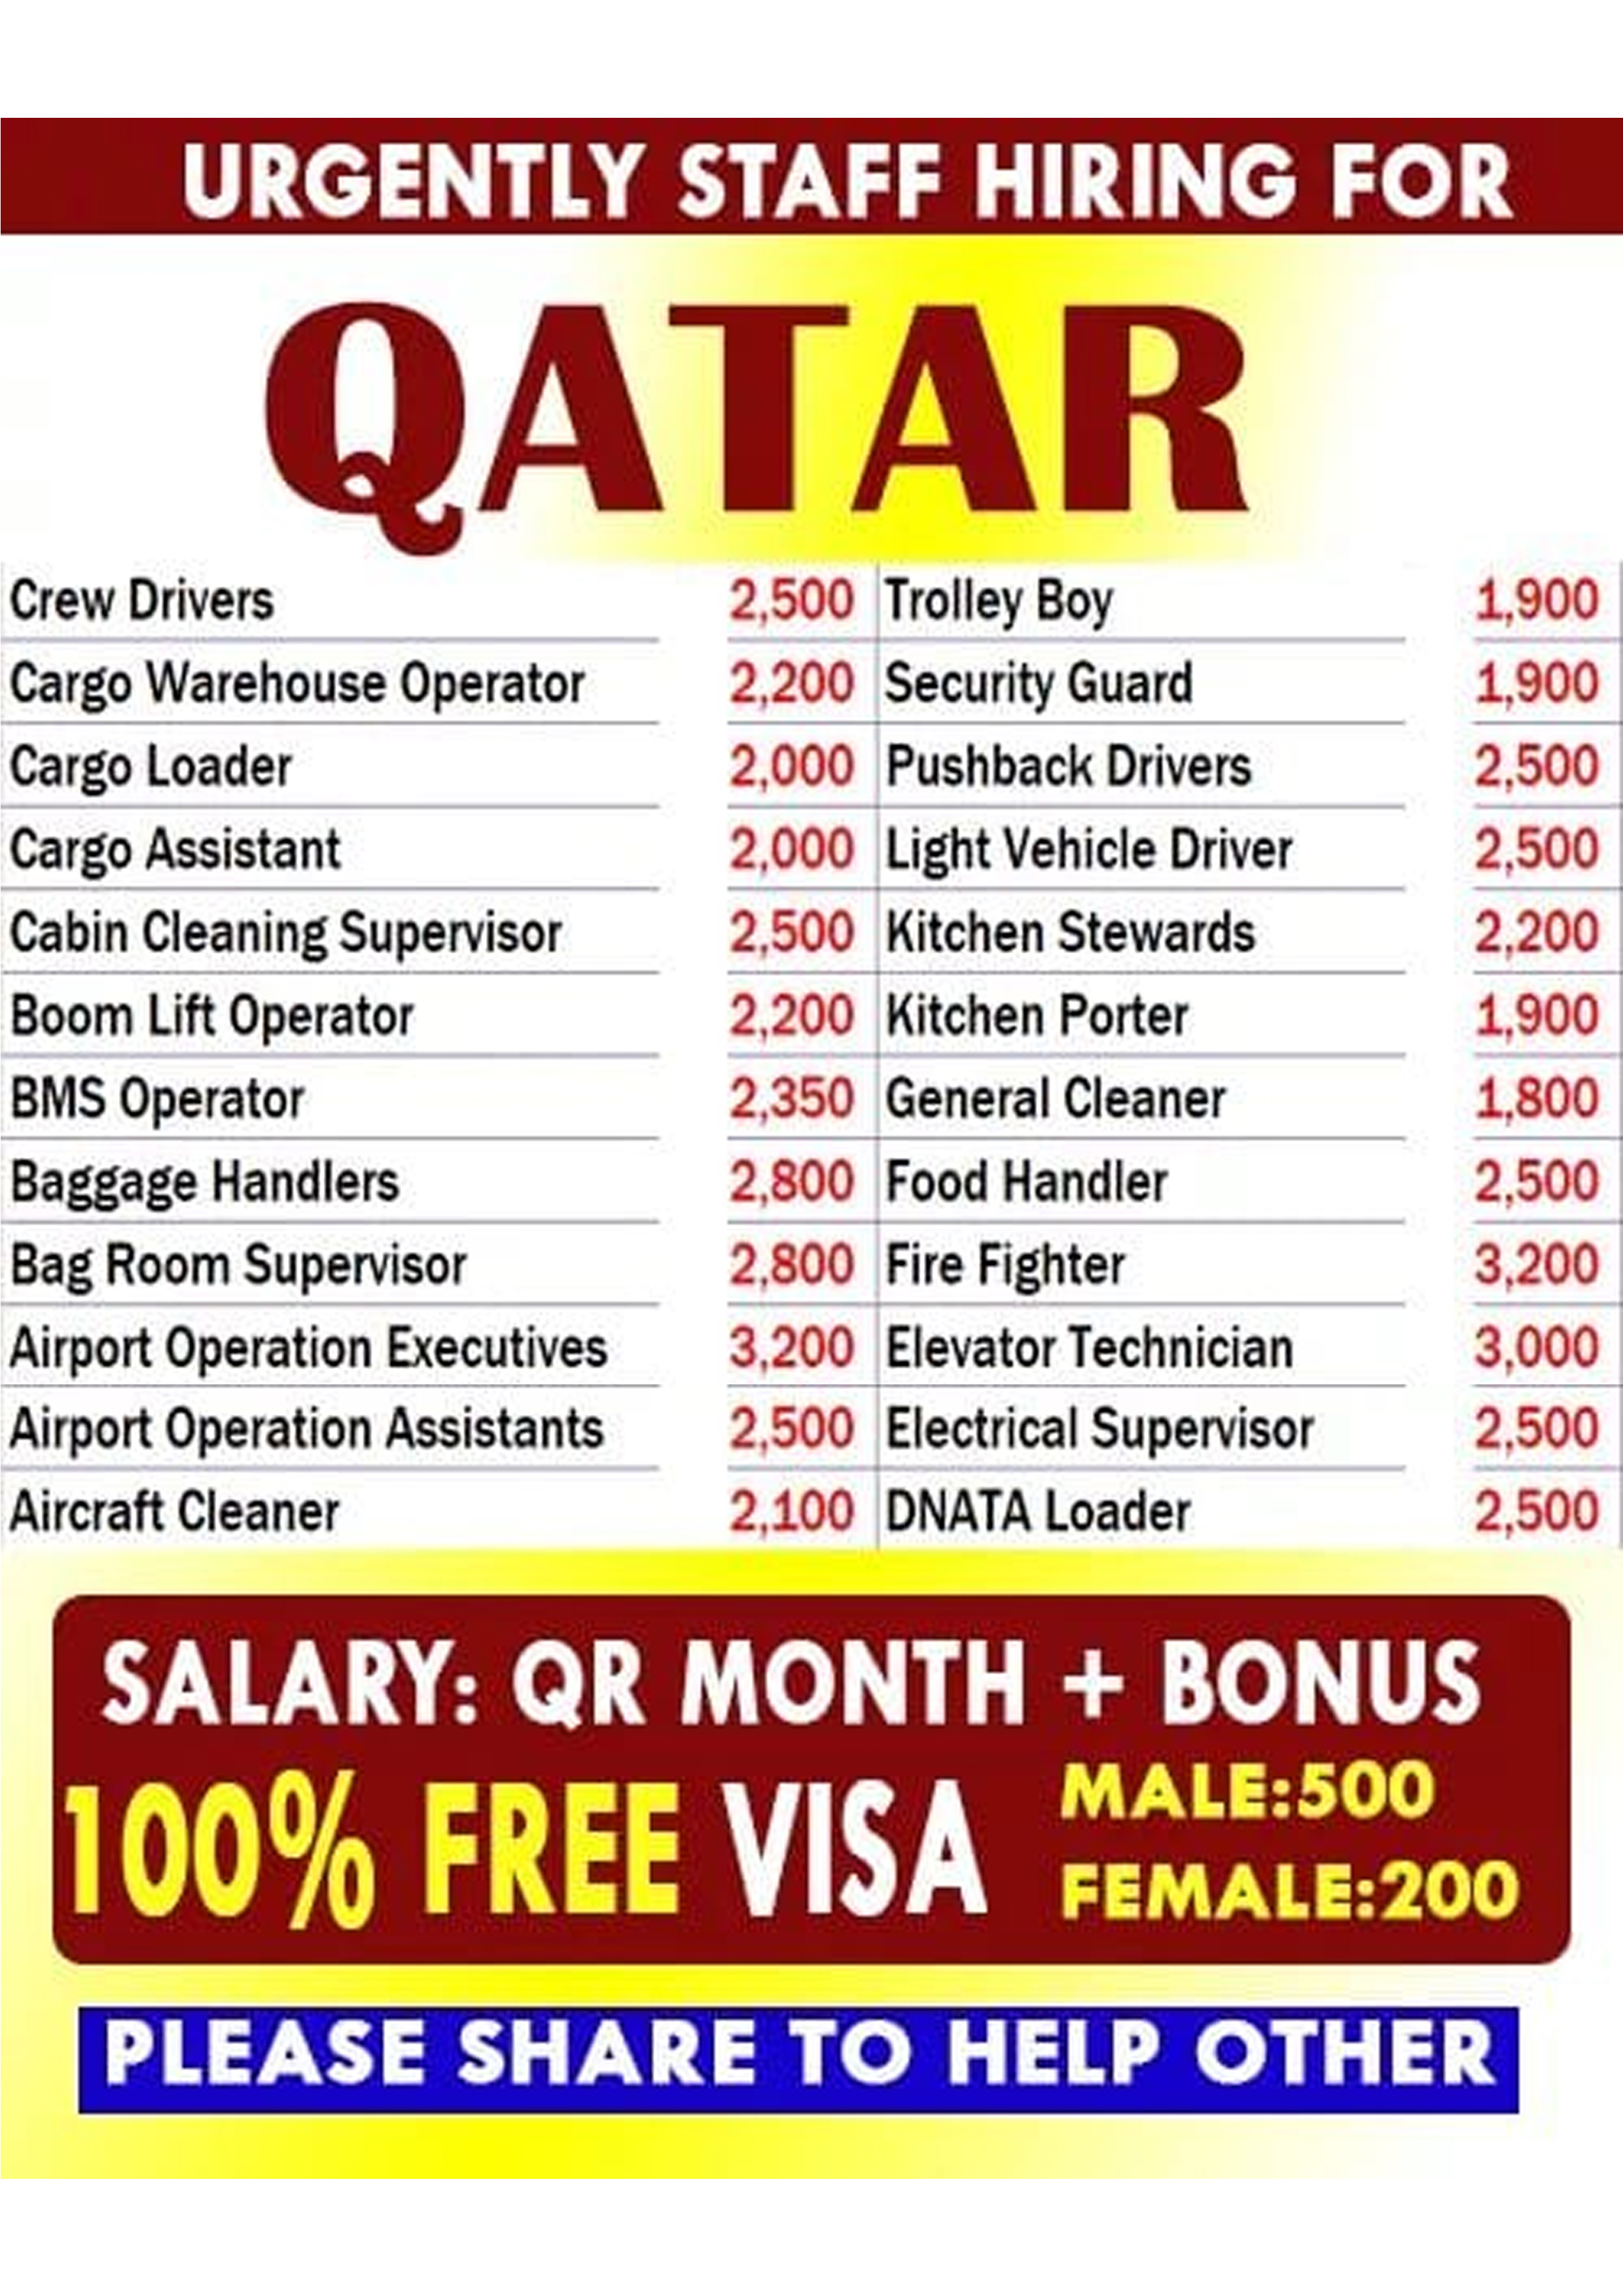 job for me zealand hiring qatar